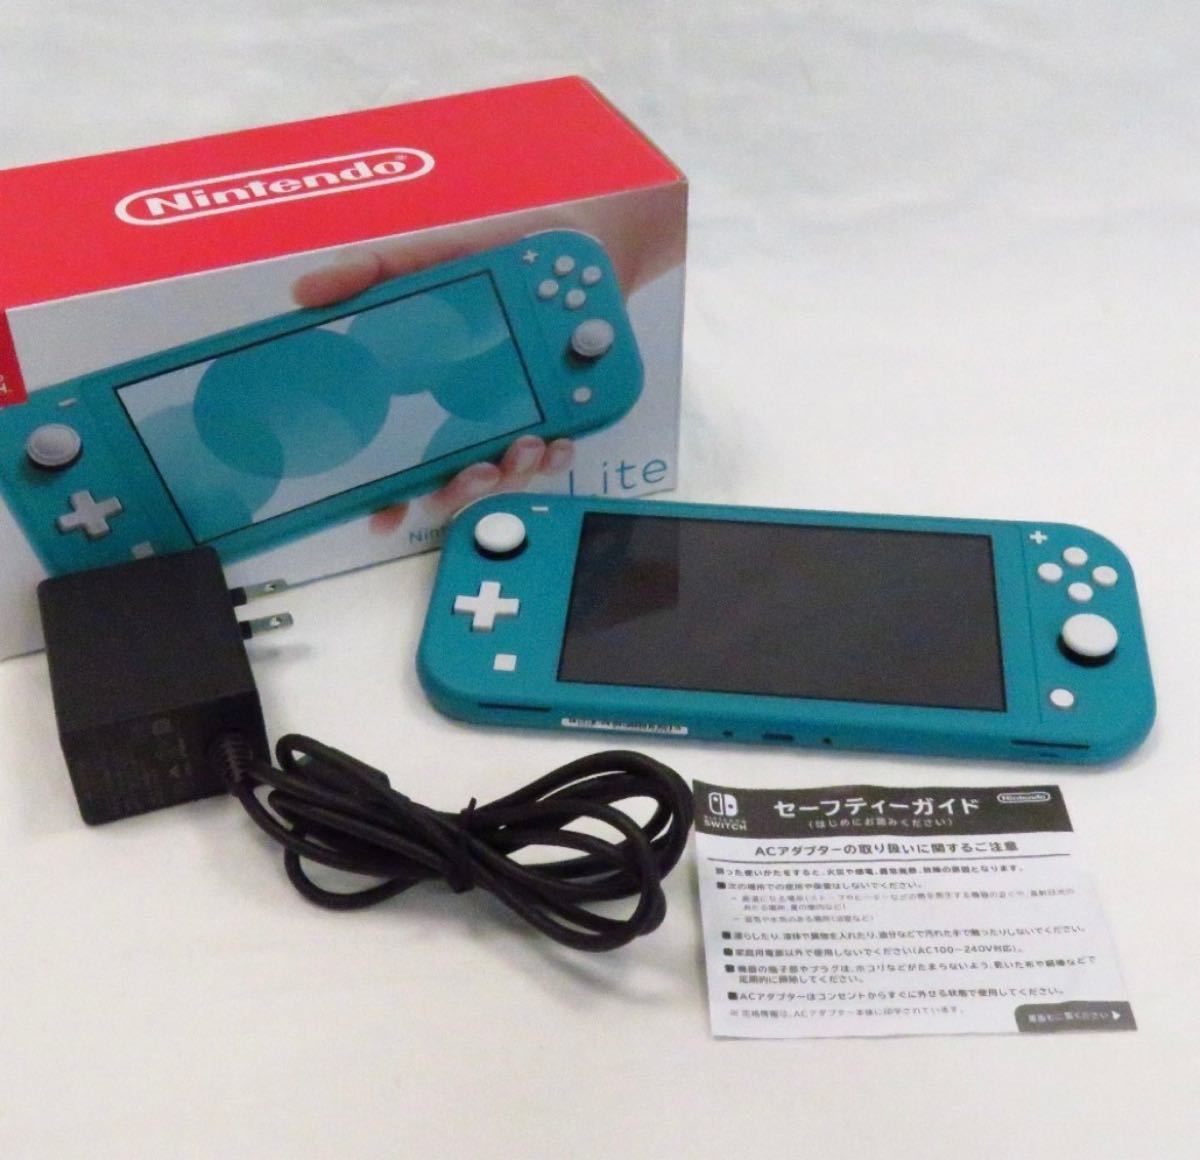 Nintendo Switch Light ニンテンドー スイッチ ライト ターコイズ 美品 完品 動作確認済み